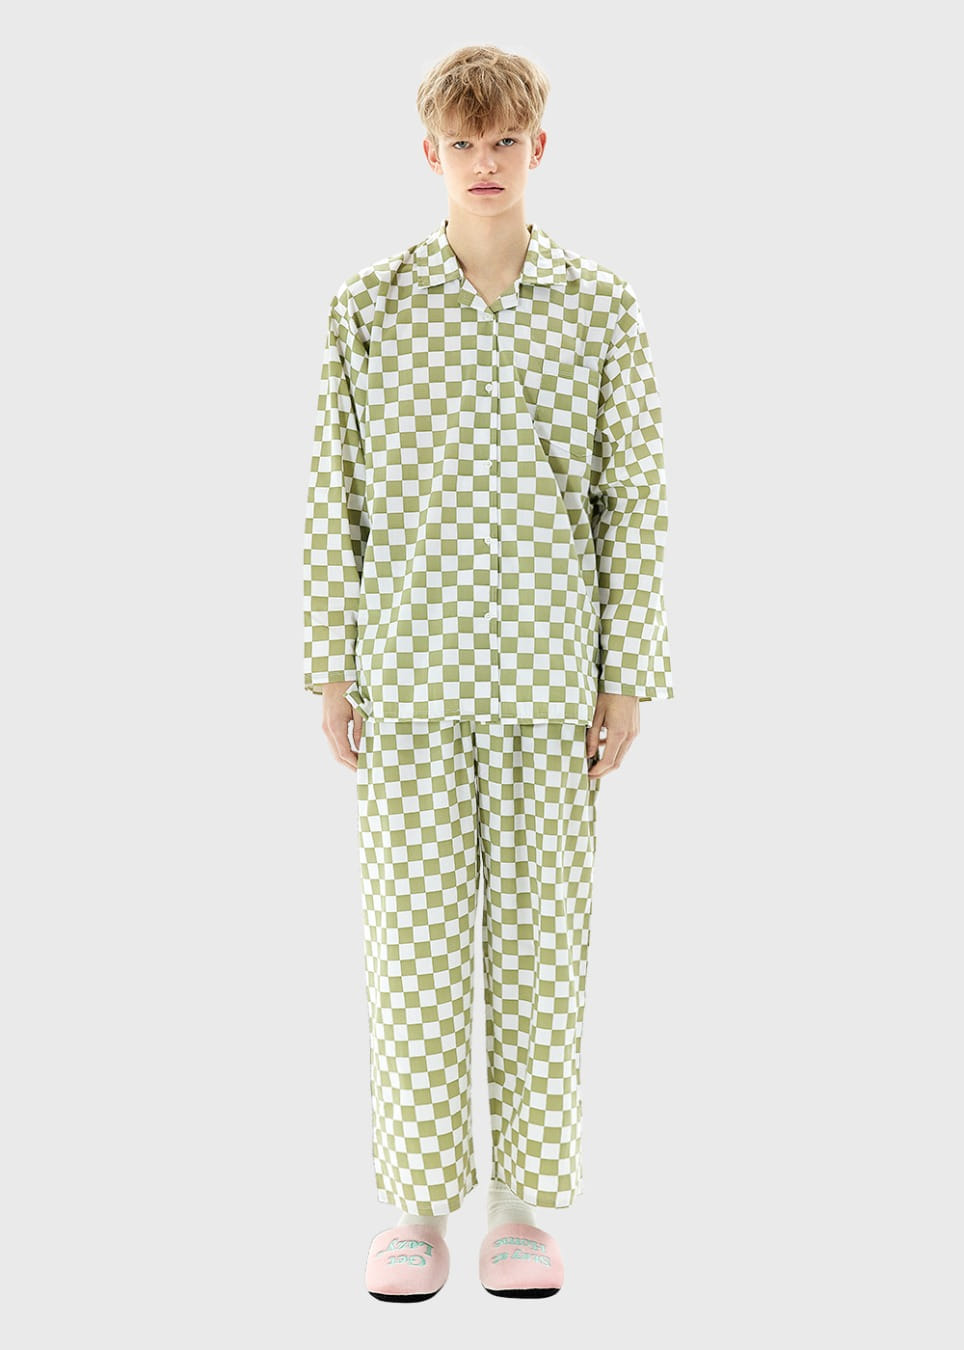 Chilling pajama Long Sets : Olive